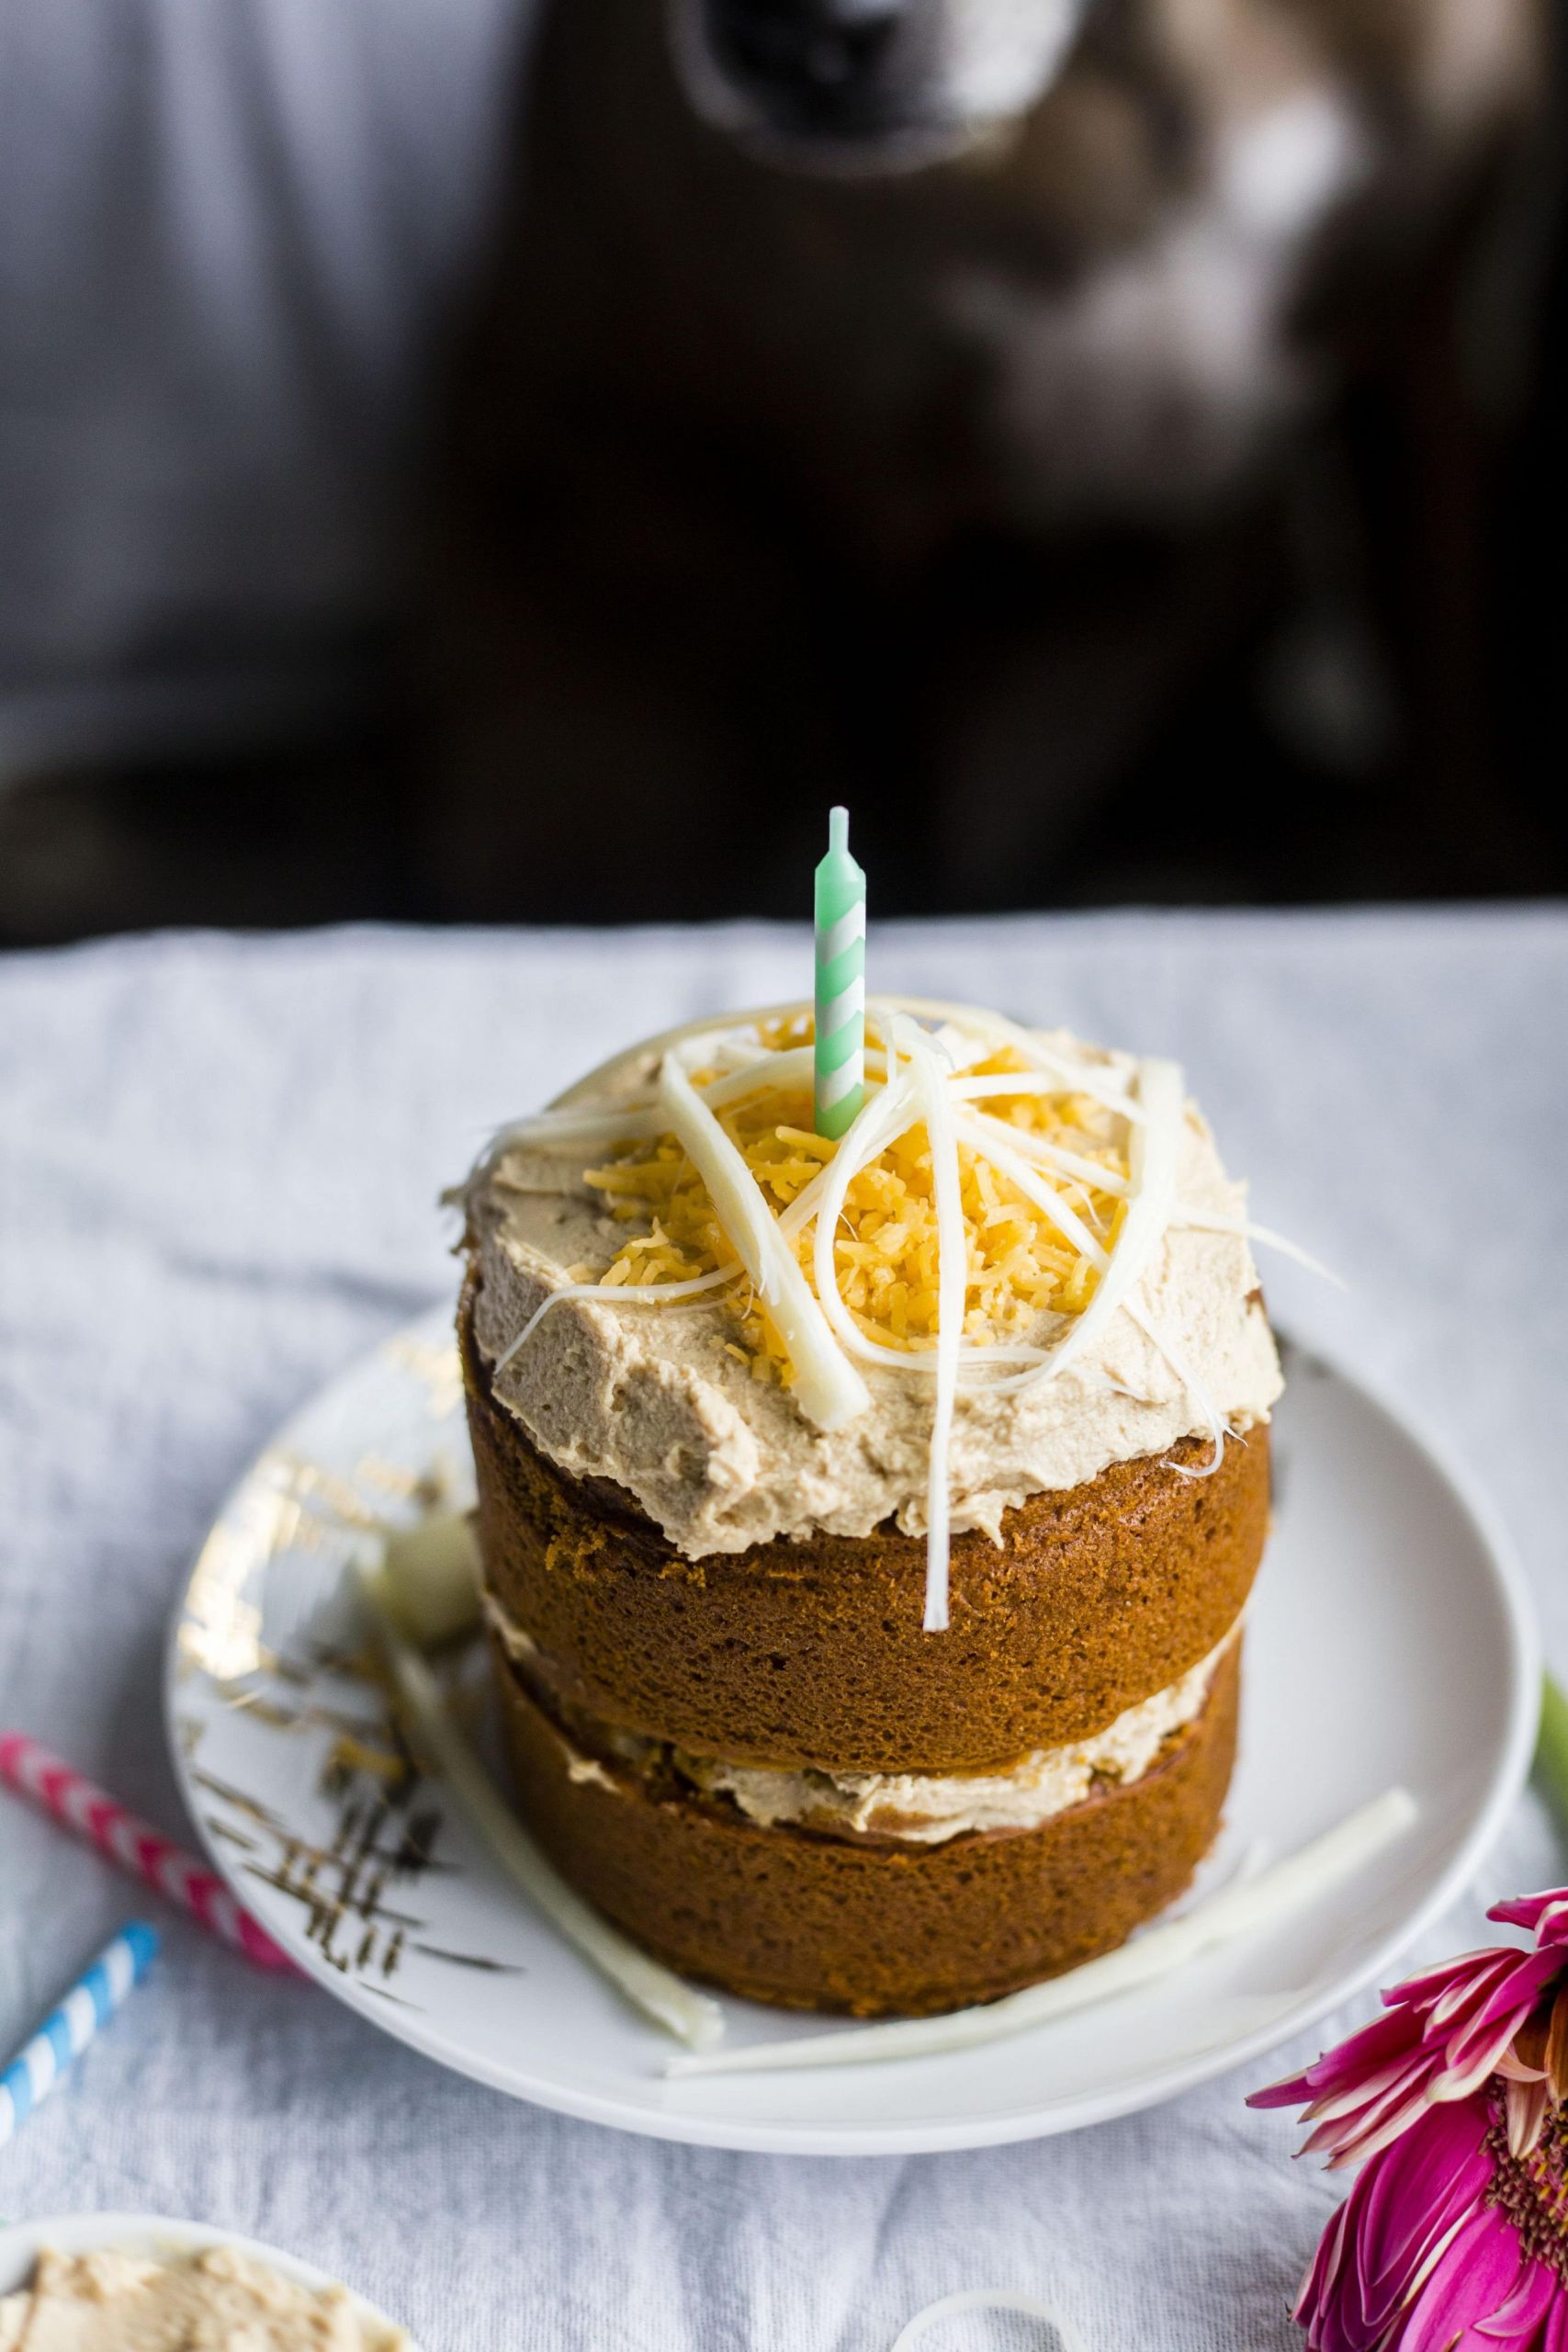 Dog Birthday Cake Recipe Without Peanut Butter
 Mini Dog Birthday Cake